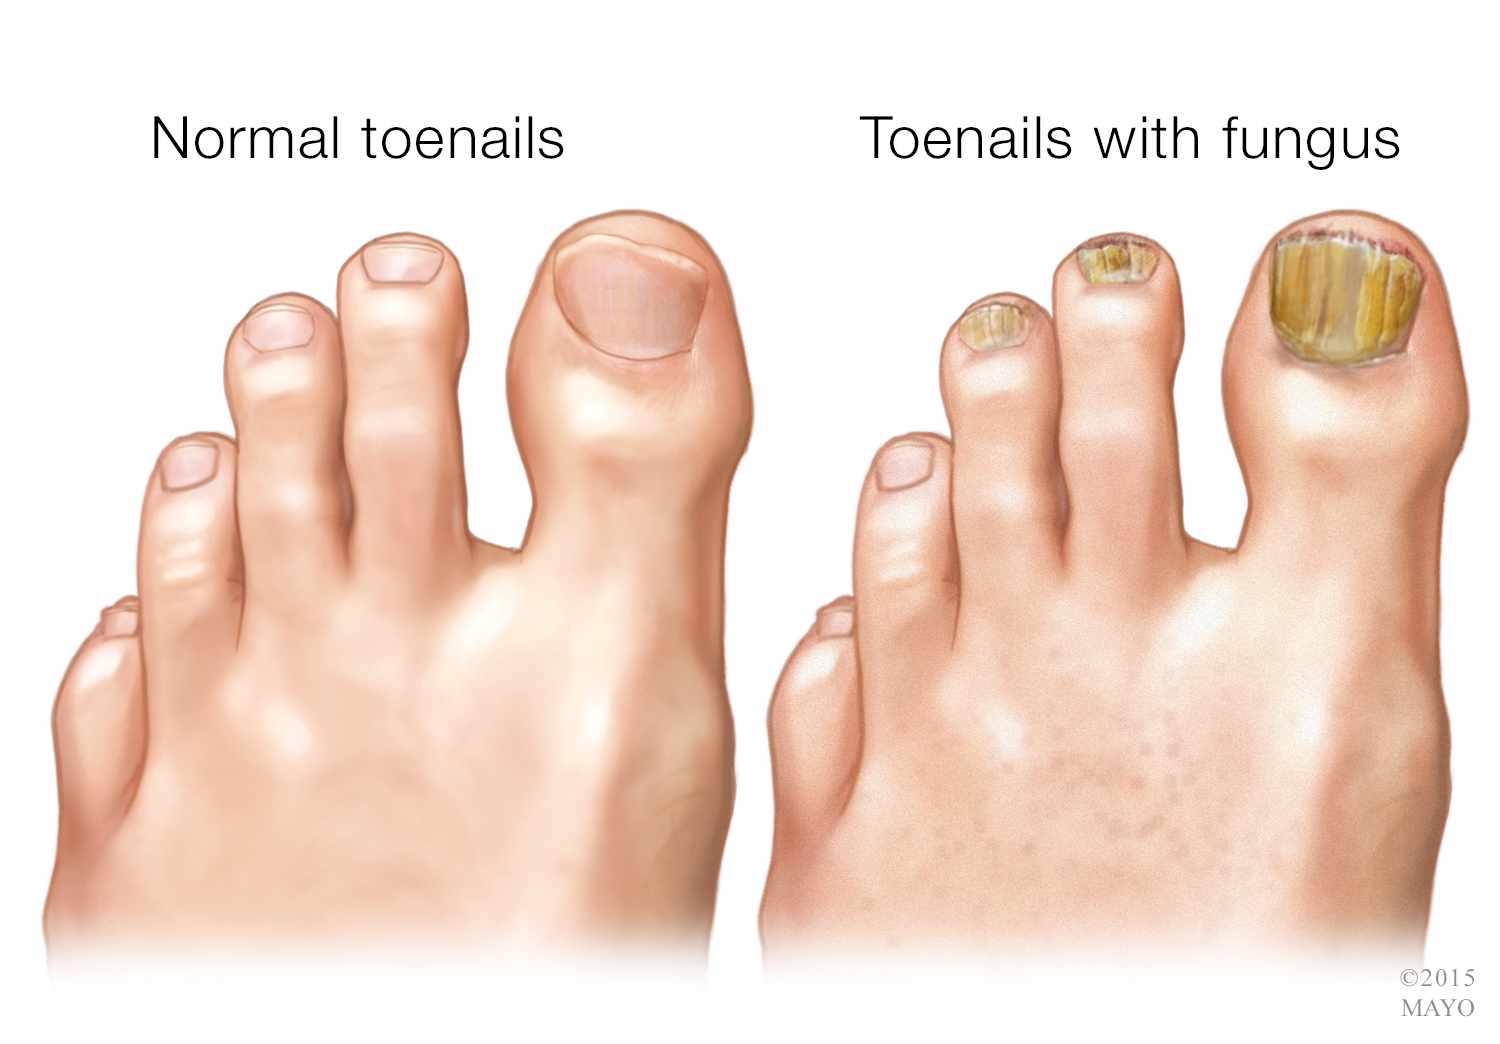 How to treat toenail fungus with vicks